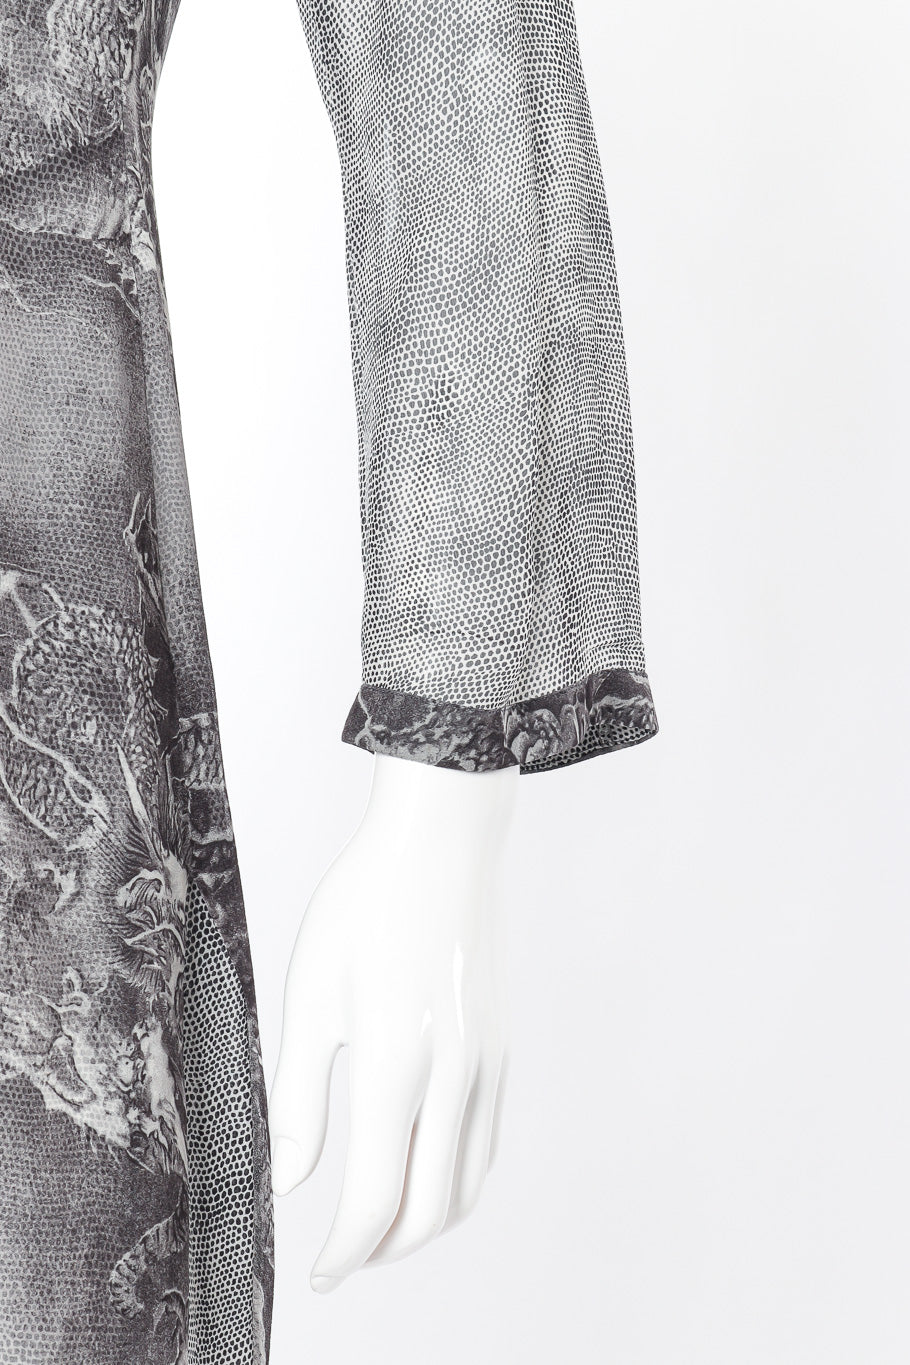 Kenzo Dragon Print Silk Tunic sleeve closeup @Recessla